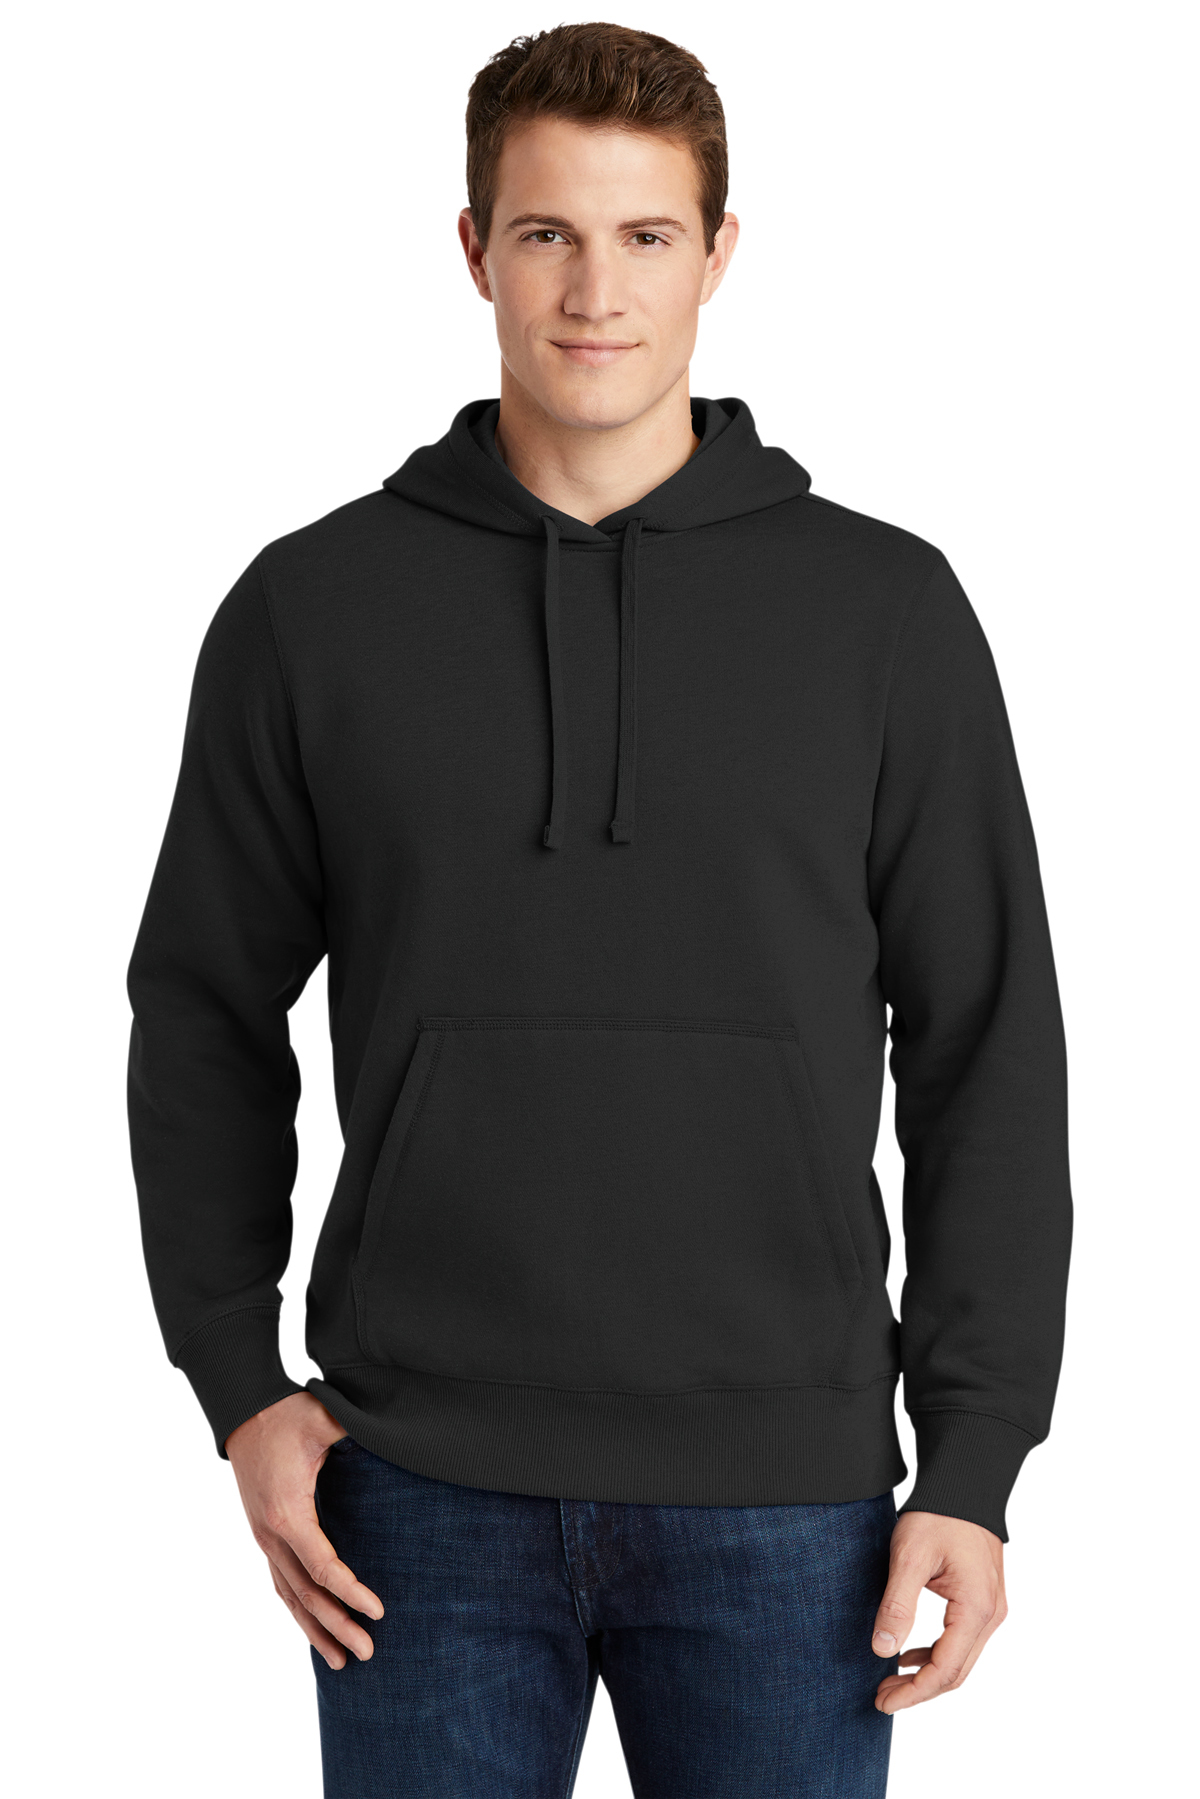 SPORT-TEK Men's Pullover Hooded Sweatshirt 